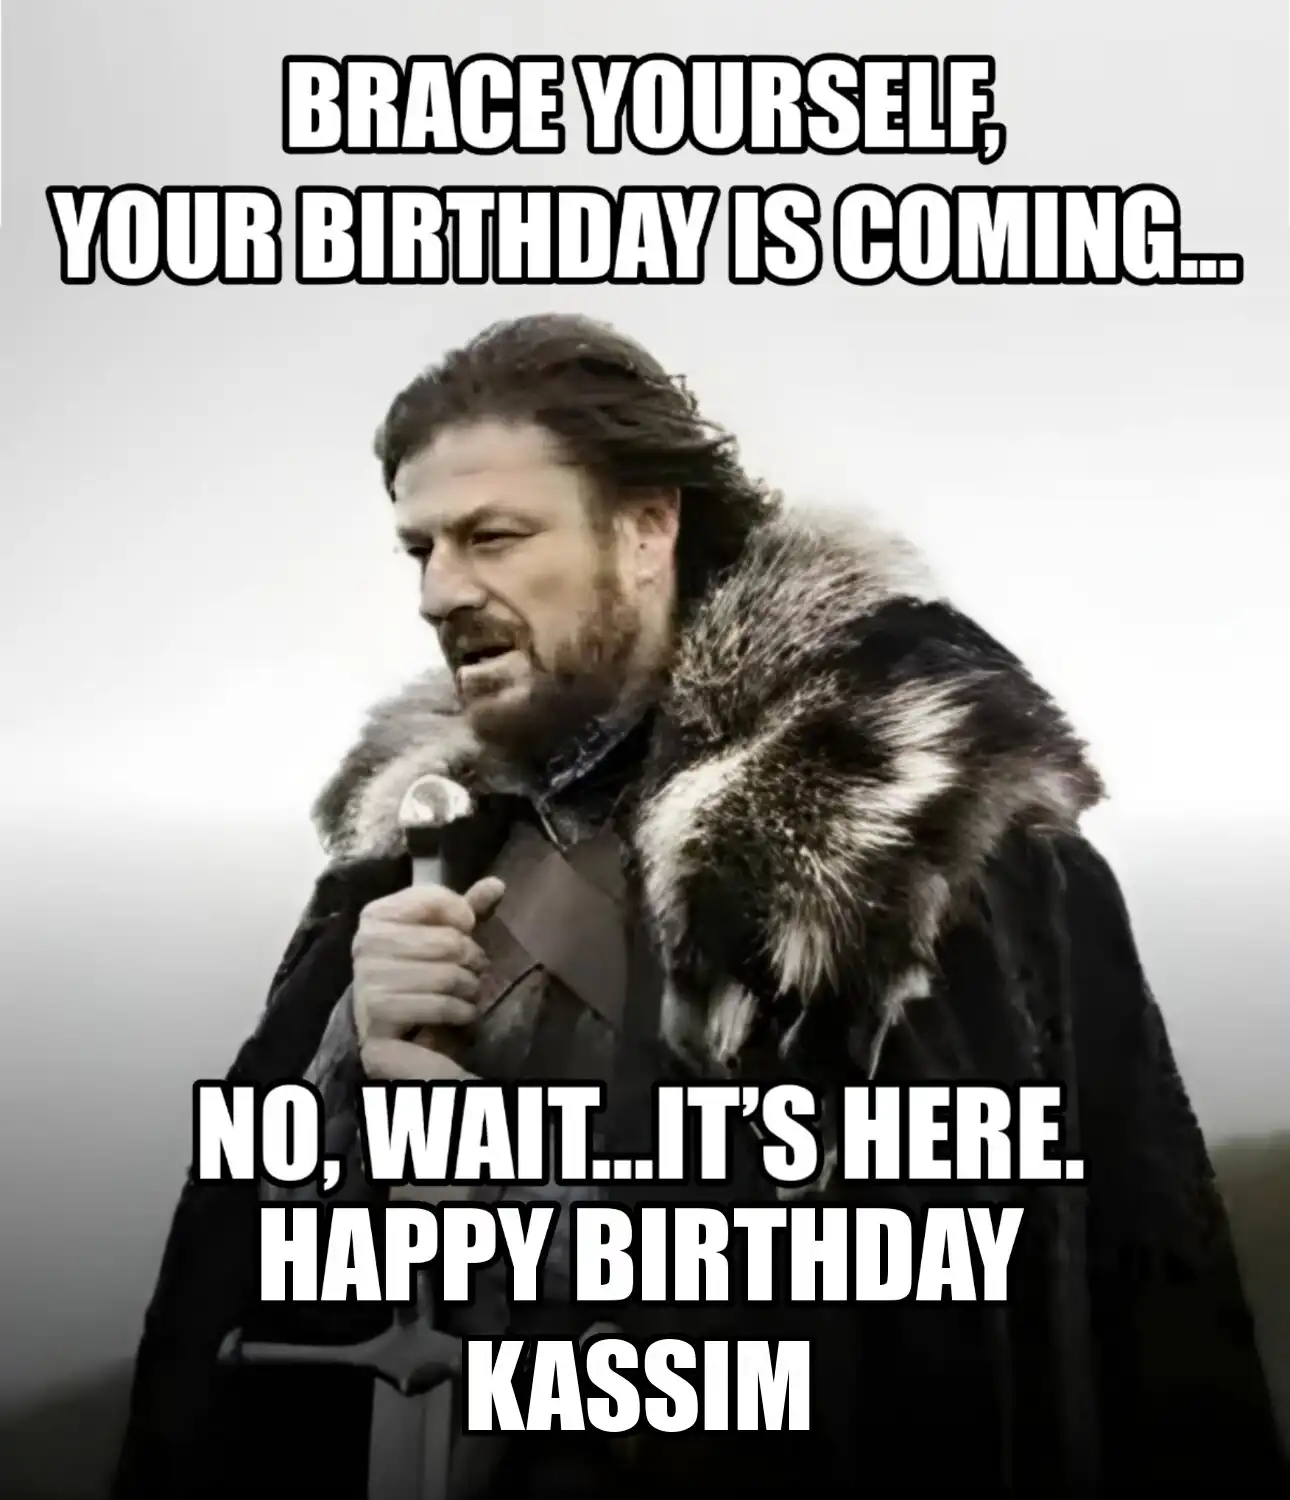 Happy Birthday Kassim Brace Yourself Your Birthday Is Coming Meme